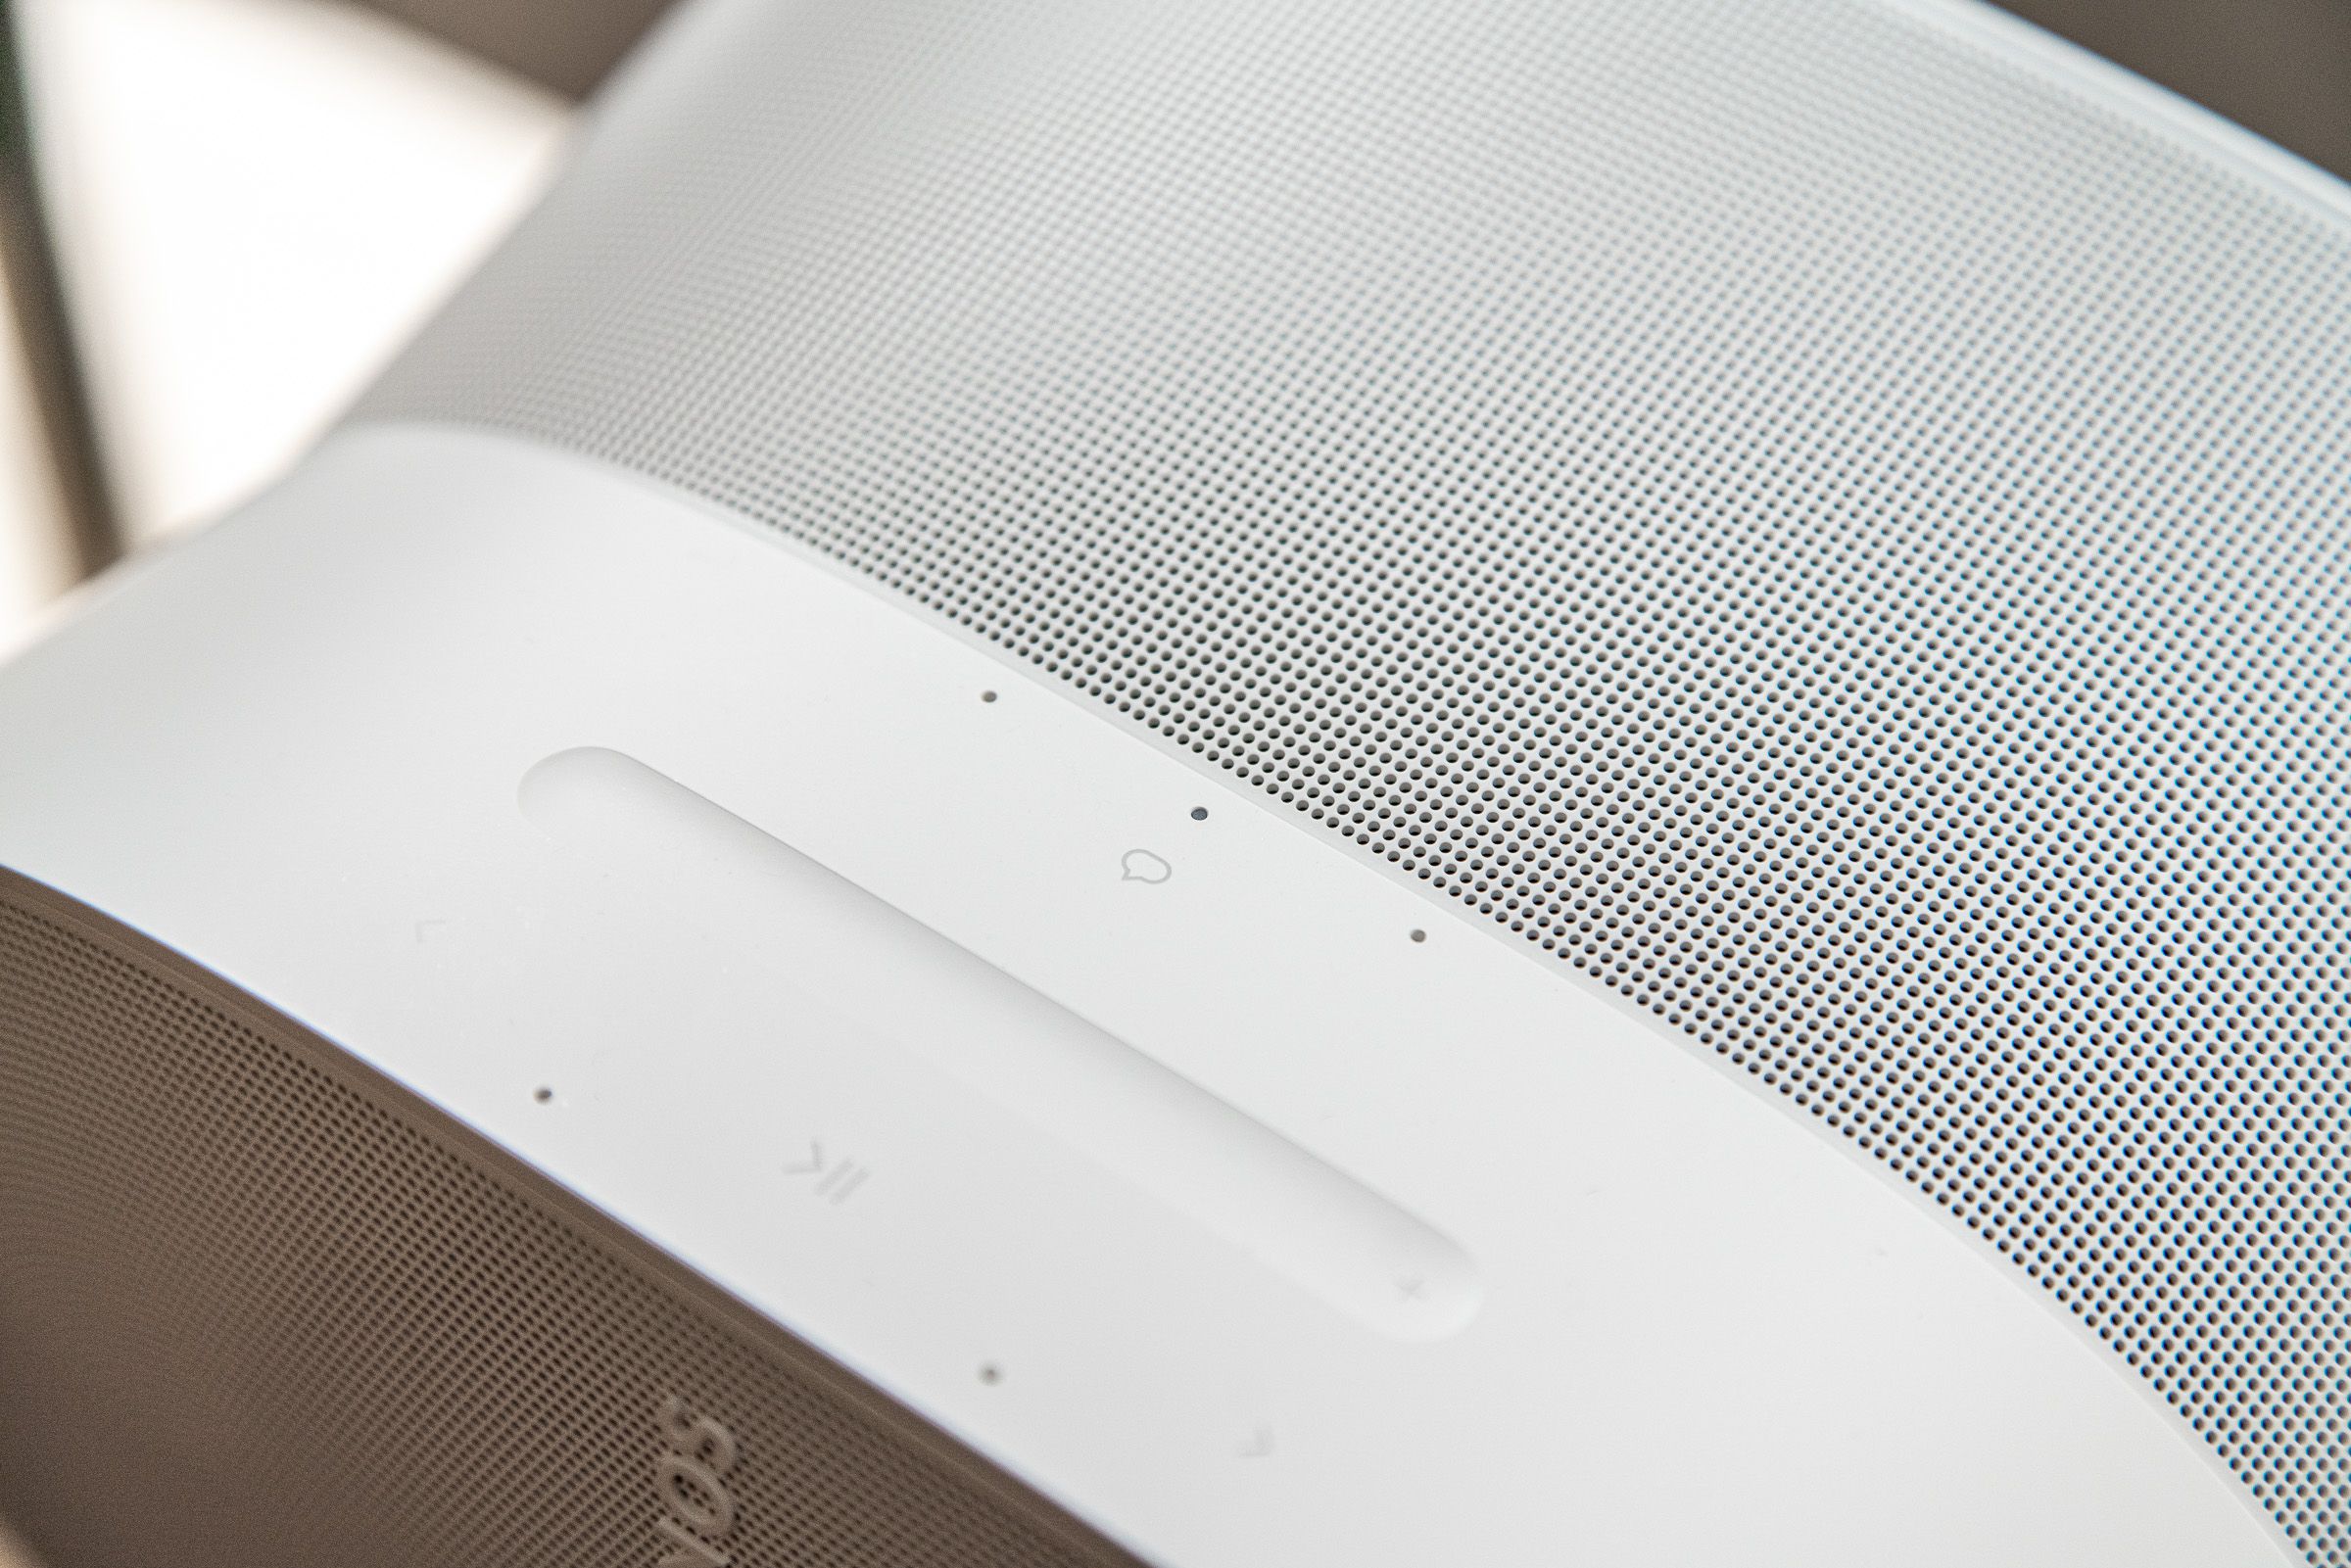 A photo of the top of Sonos’ Era 300 speaker.